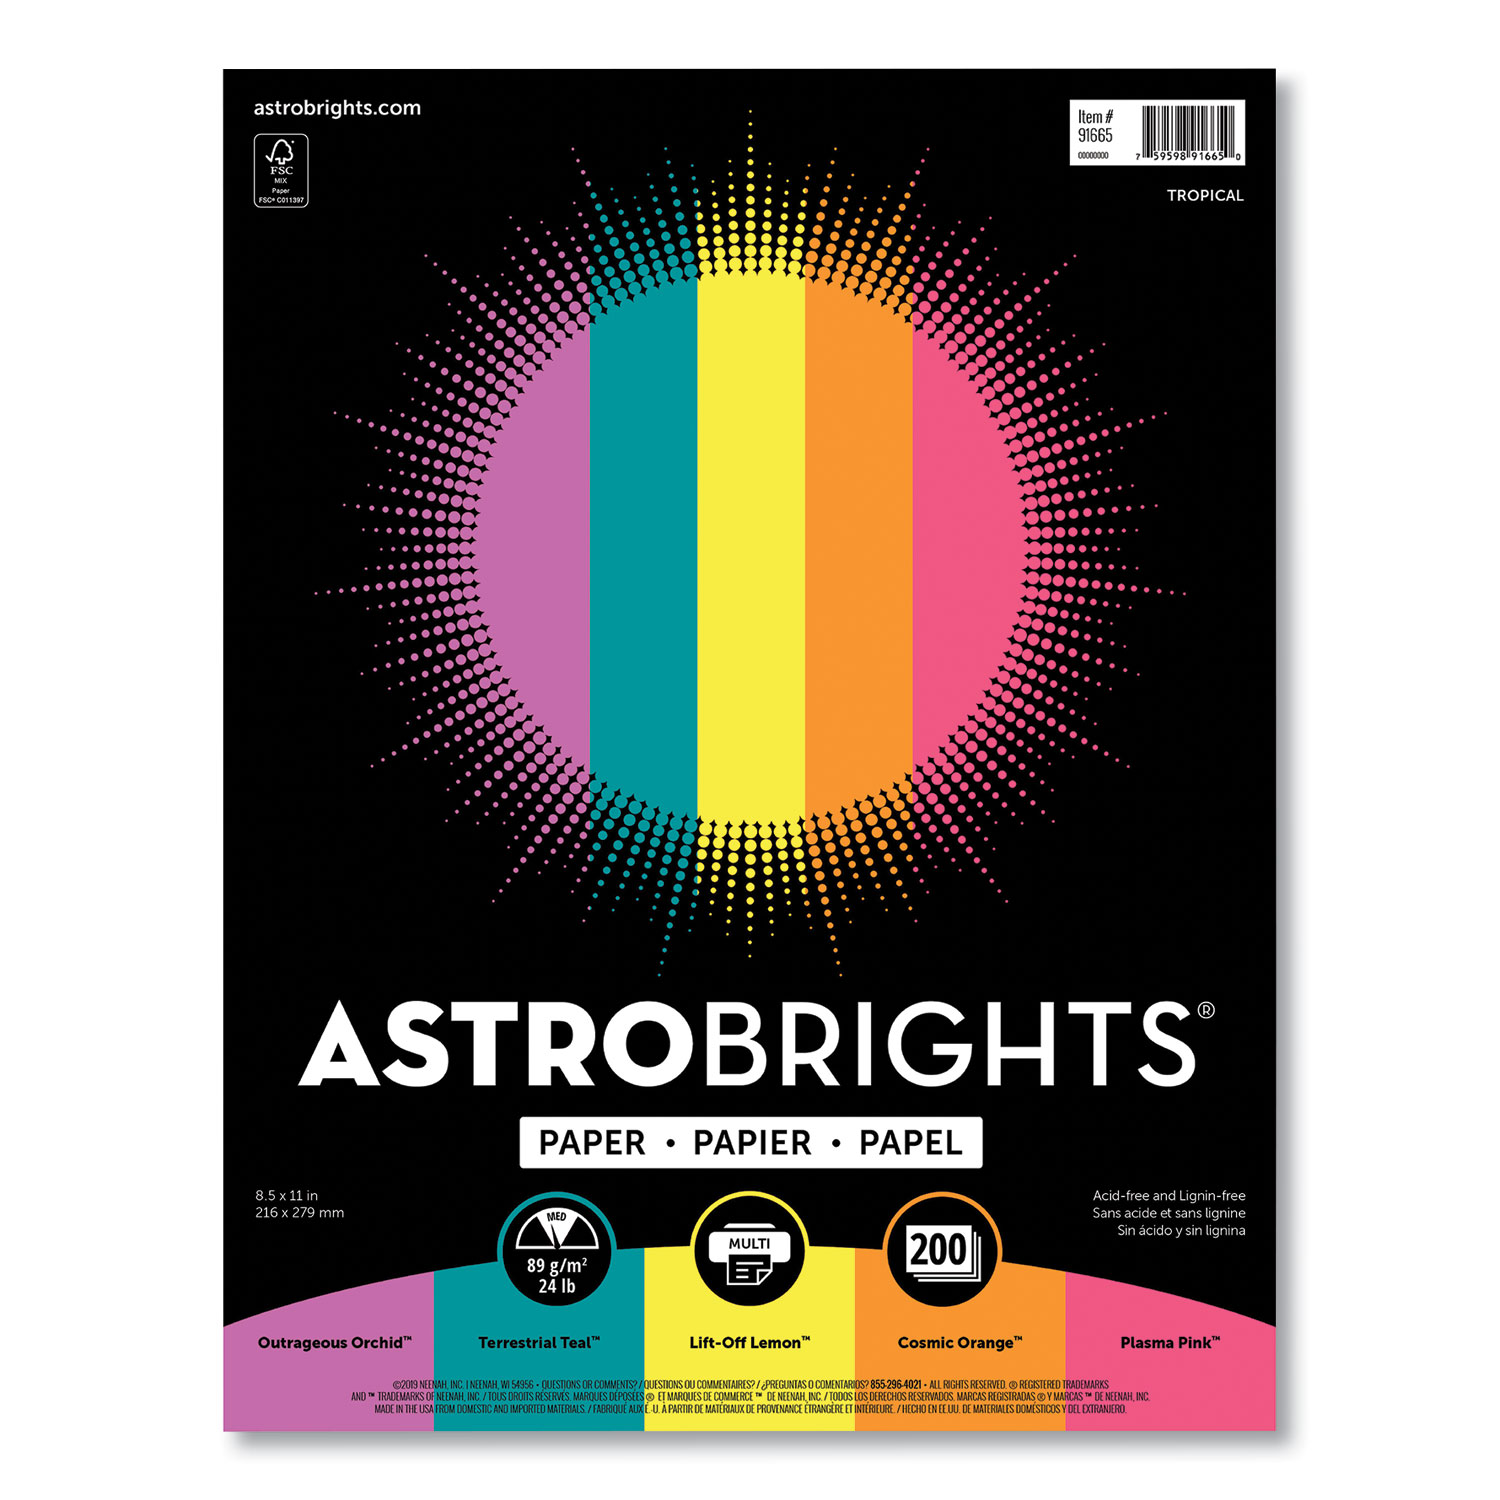  Astrobrights 91665 Color Paper - Tropical Assortment, 24 lb, 8.5 x 11, Assorted Tropical Colors, 500/Ream (WAU24396498) 